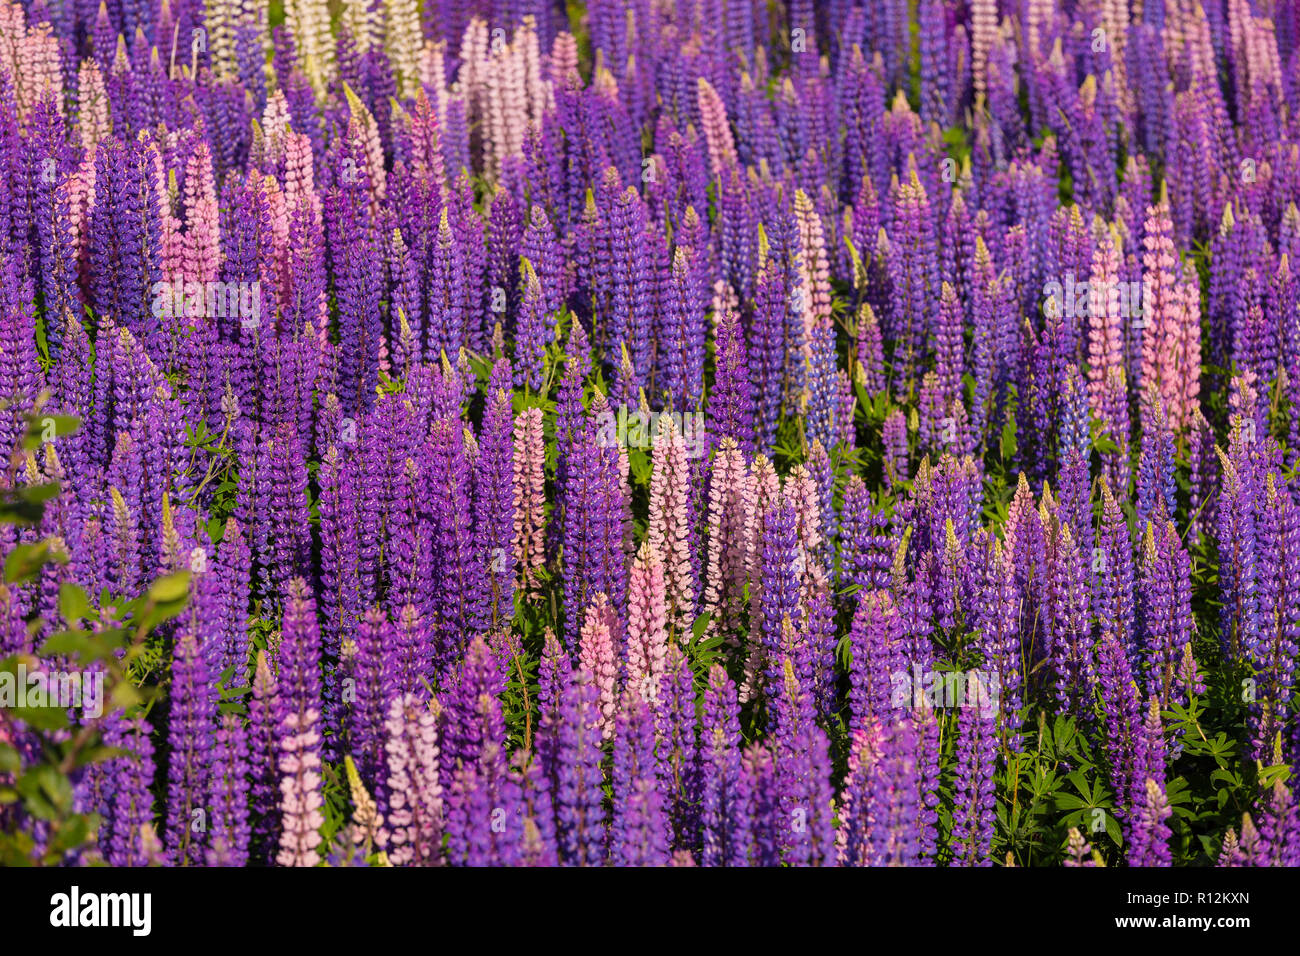 Dreifaltigkeit, Neufundland, Kanada - Lila Lupin Blumen in voller Blüte. Lupinus. Stockfoto